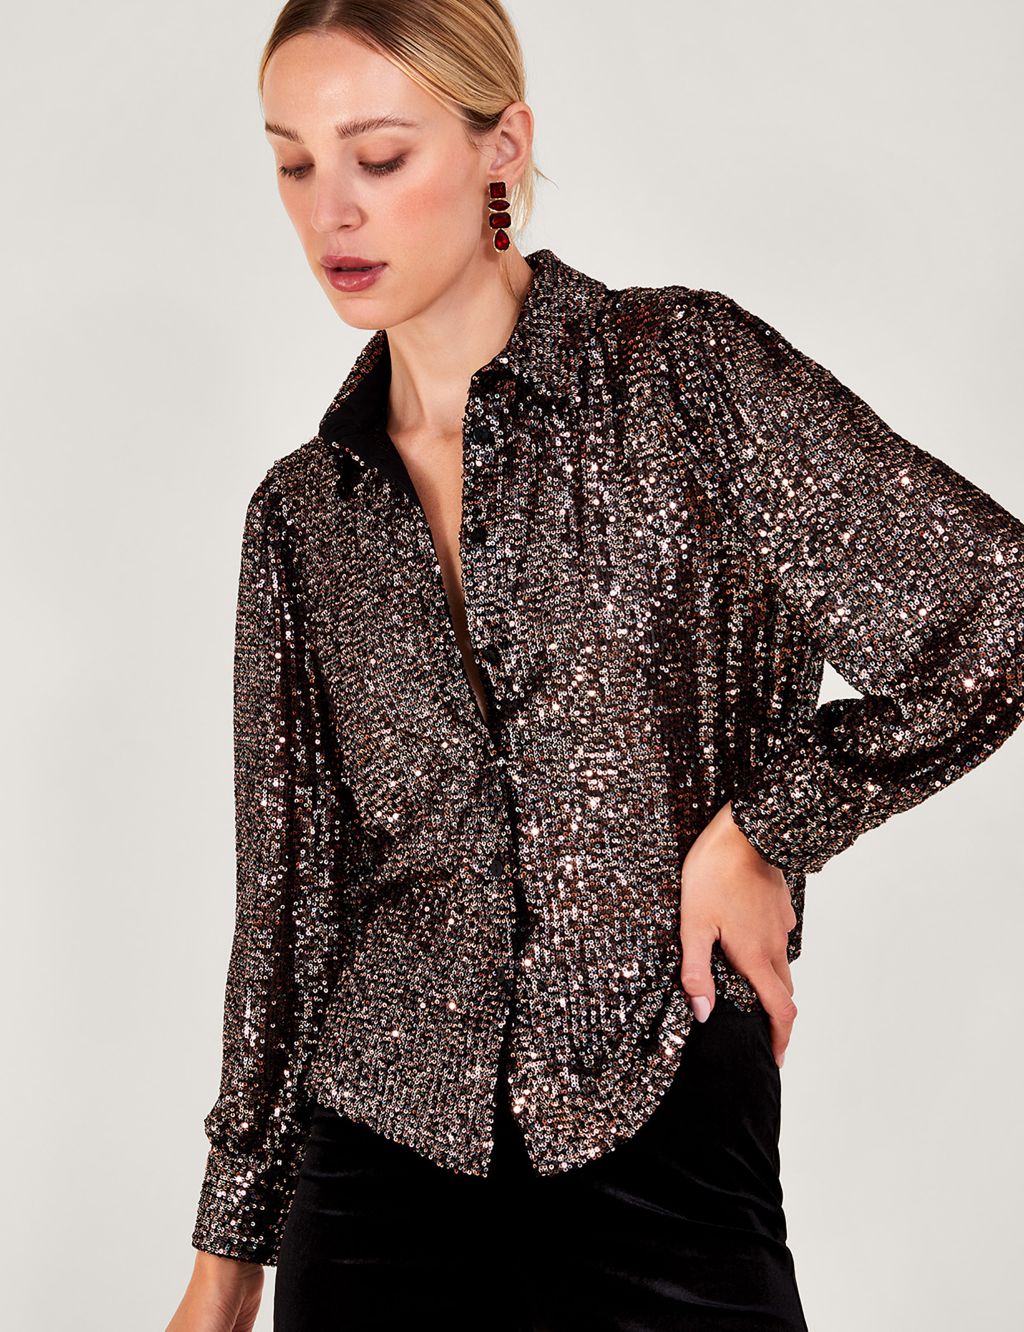 Sequin Embellished Collared Shirt image 1